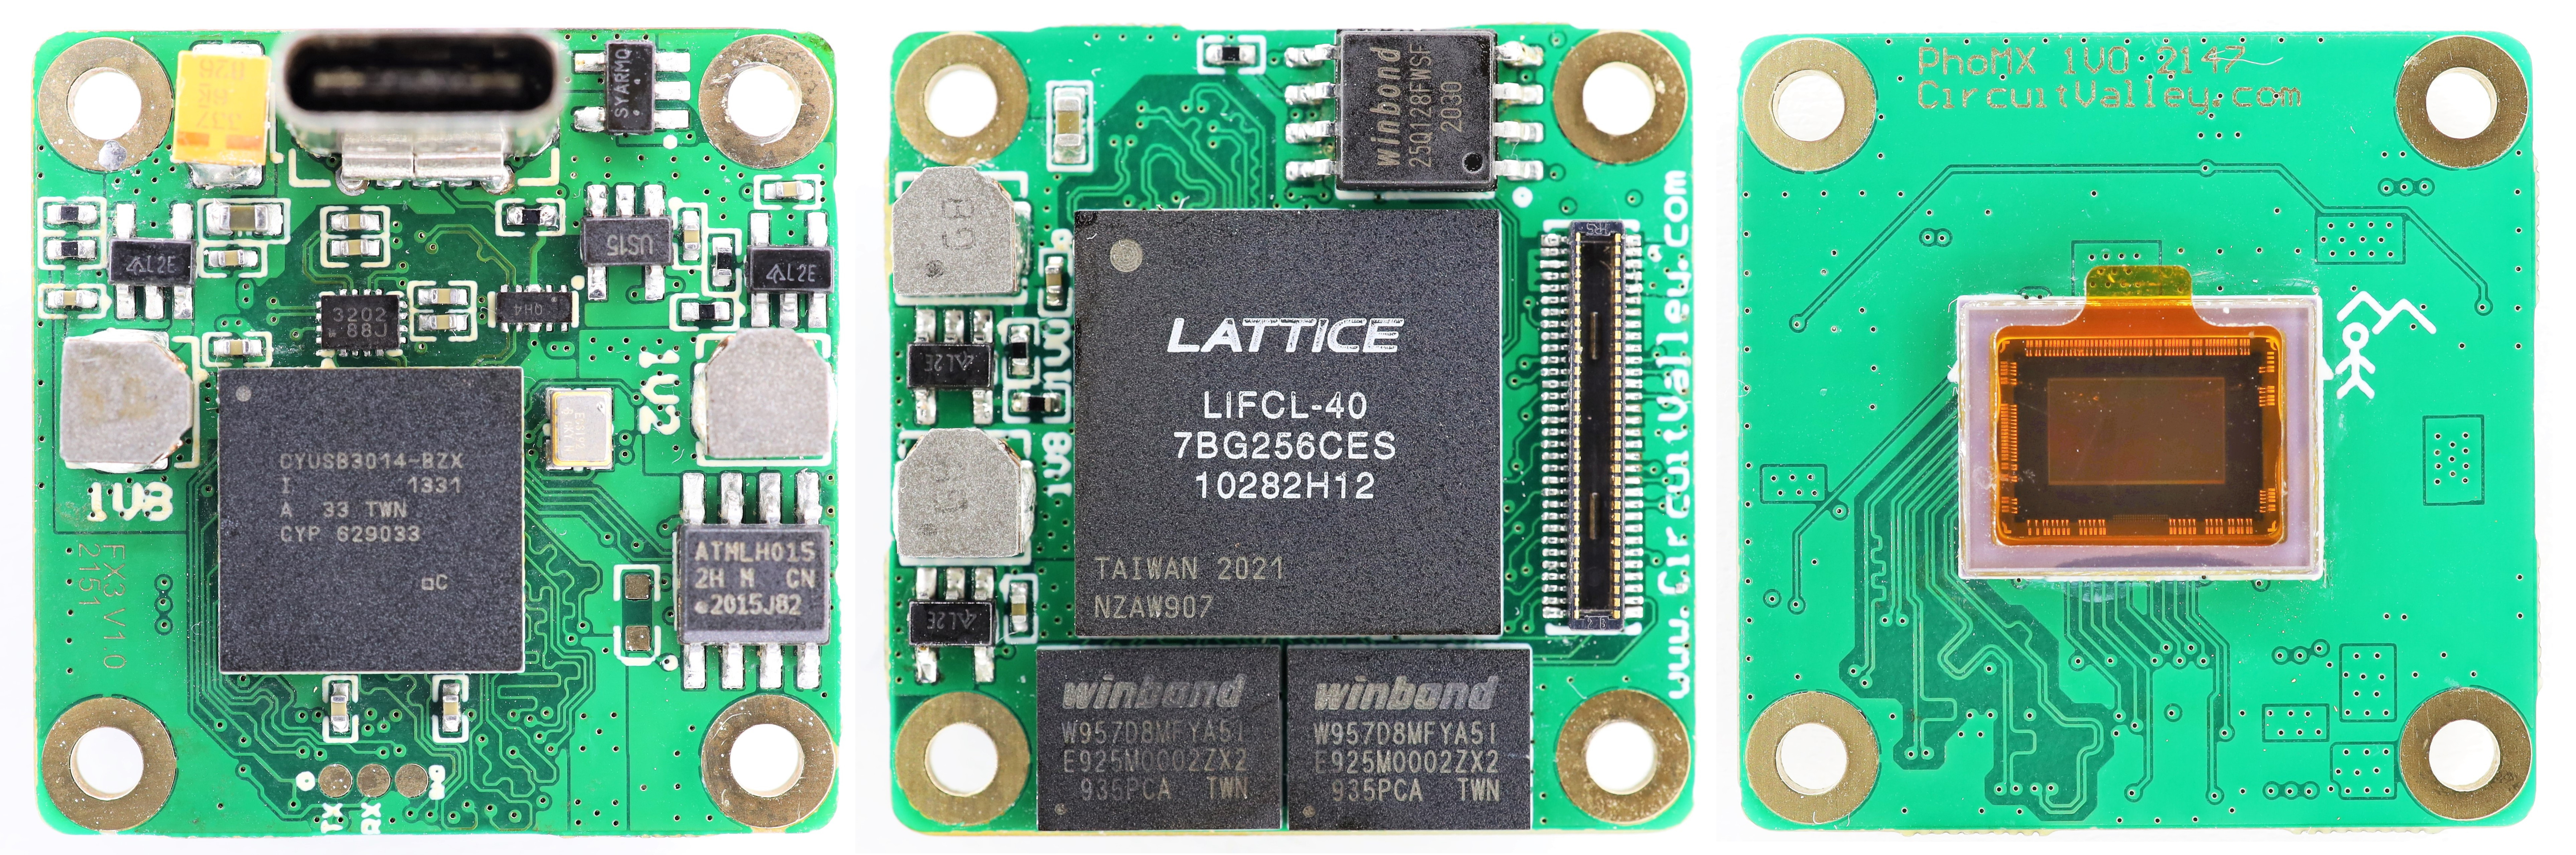 IP Lut 3D para FPGA